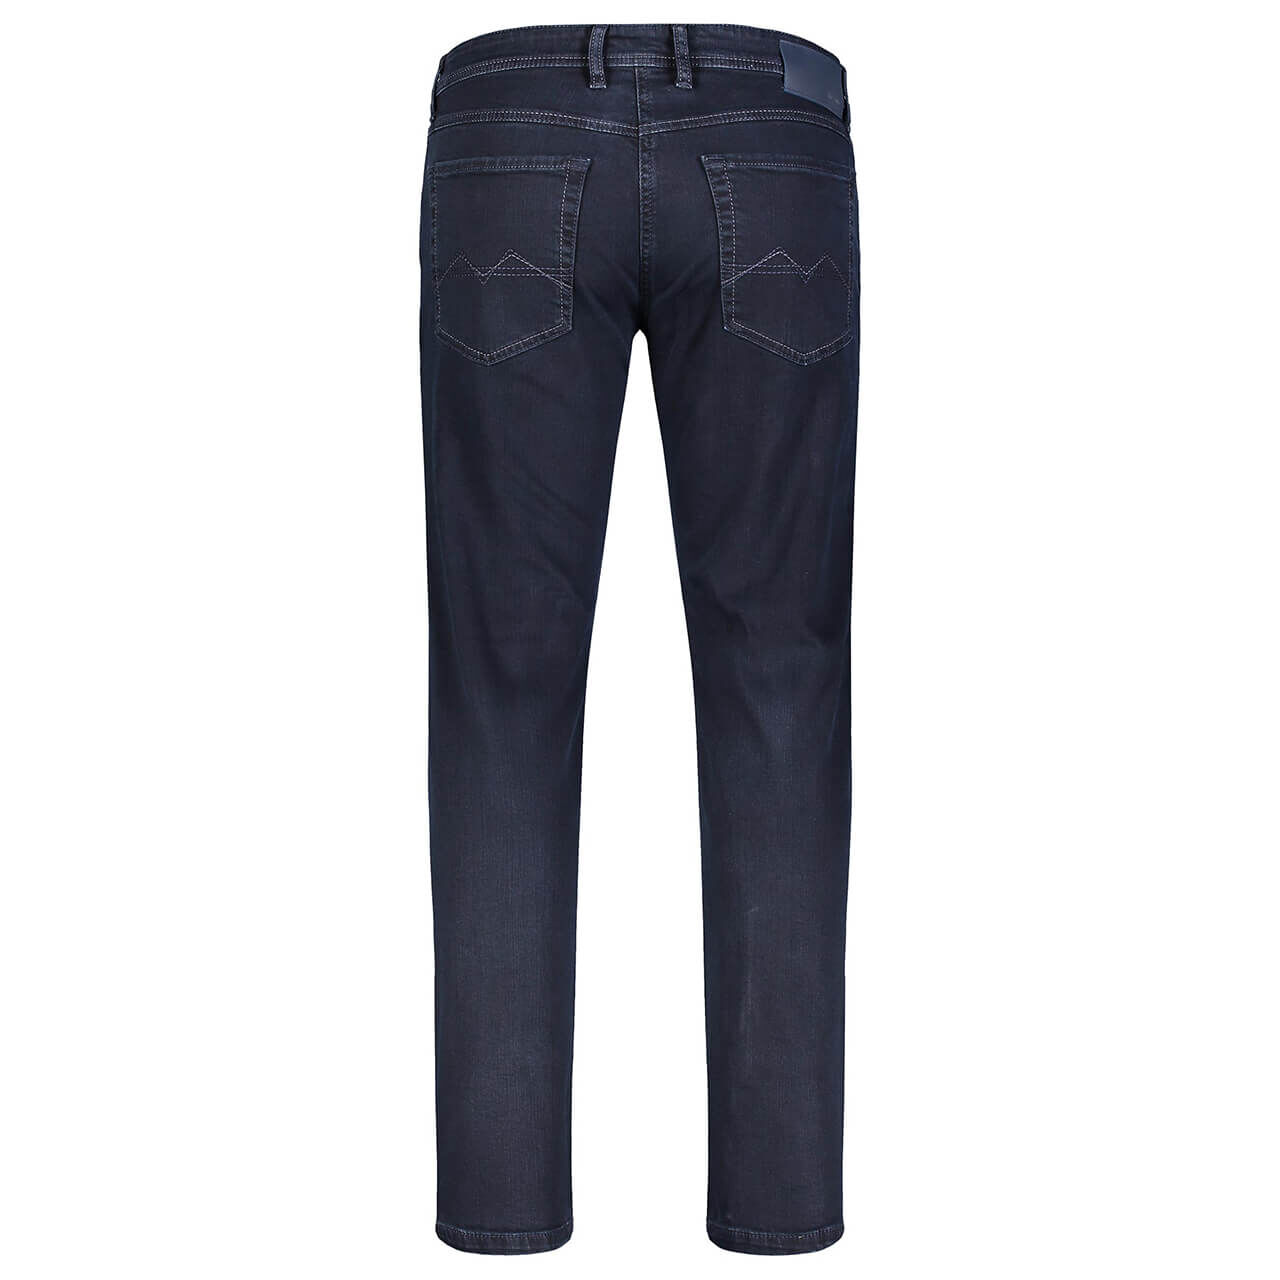 MAC Arne Jeans blue black